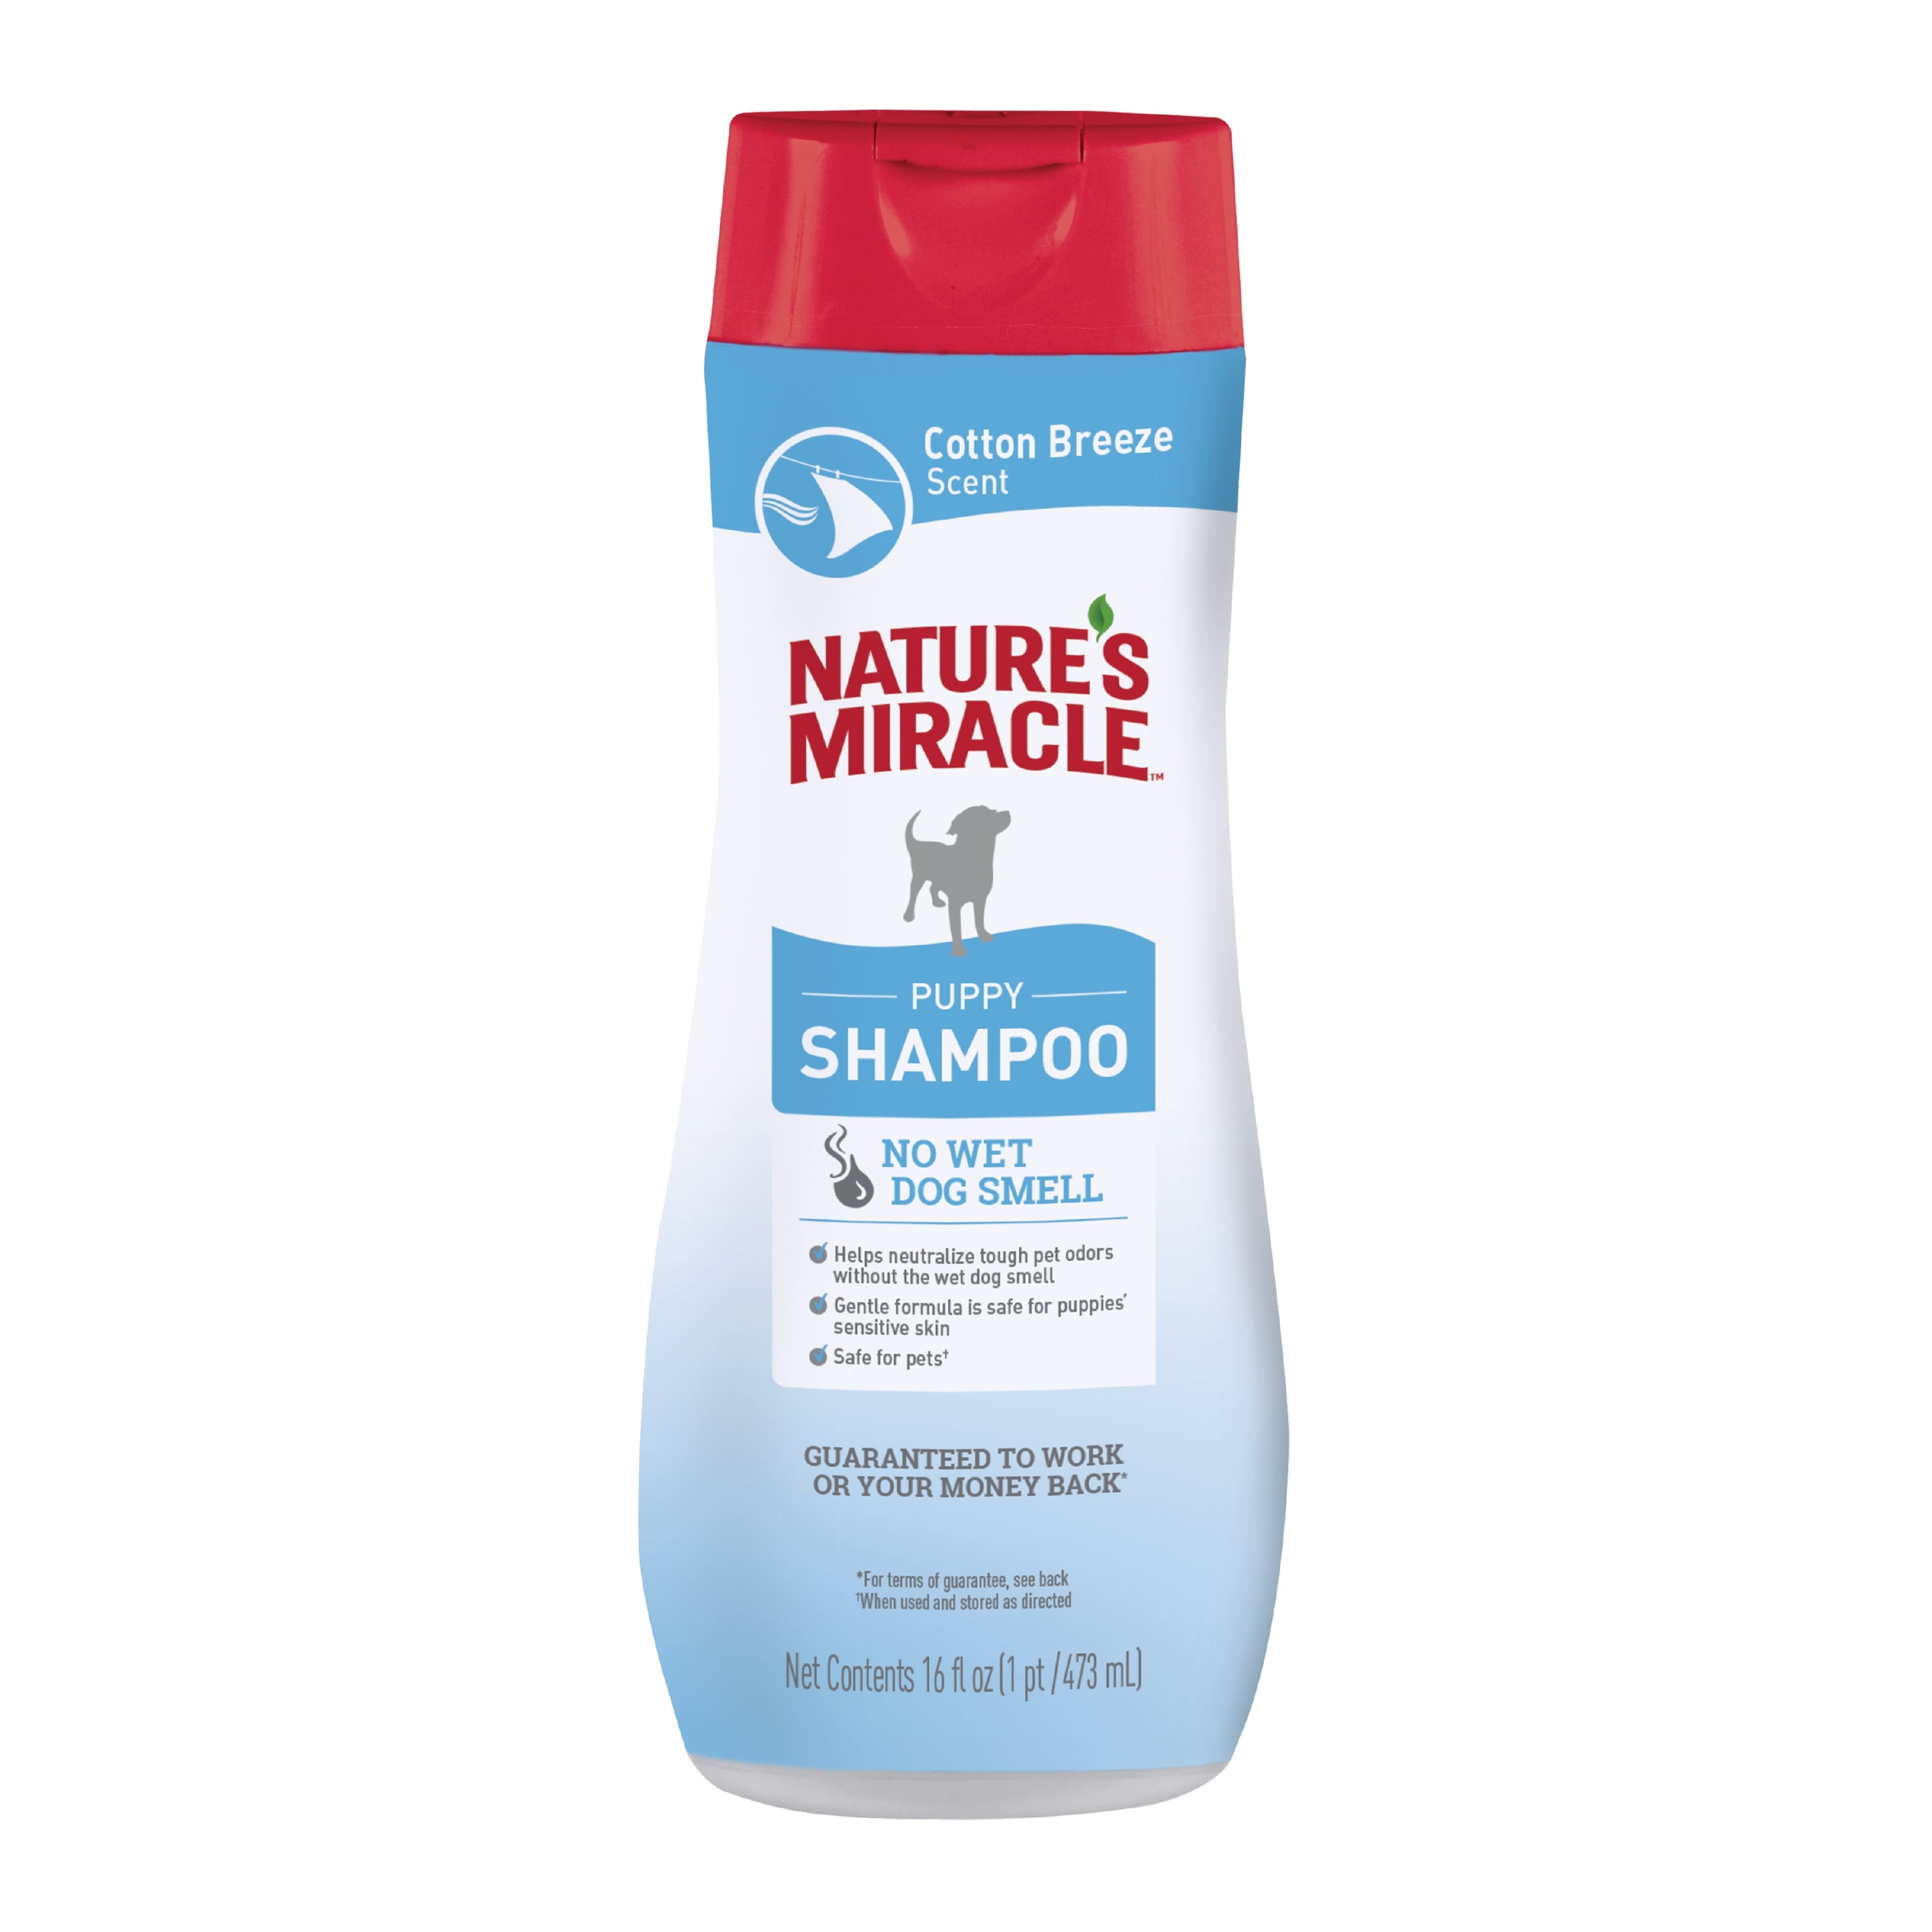 Nature’s Miracle Puppy Shampoo, 16 Ounces, Cotton Breeze Scent